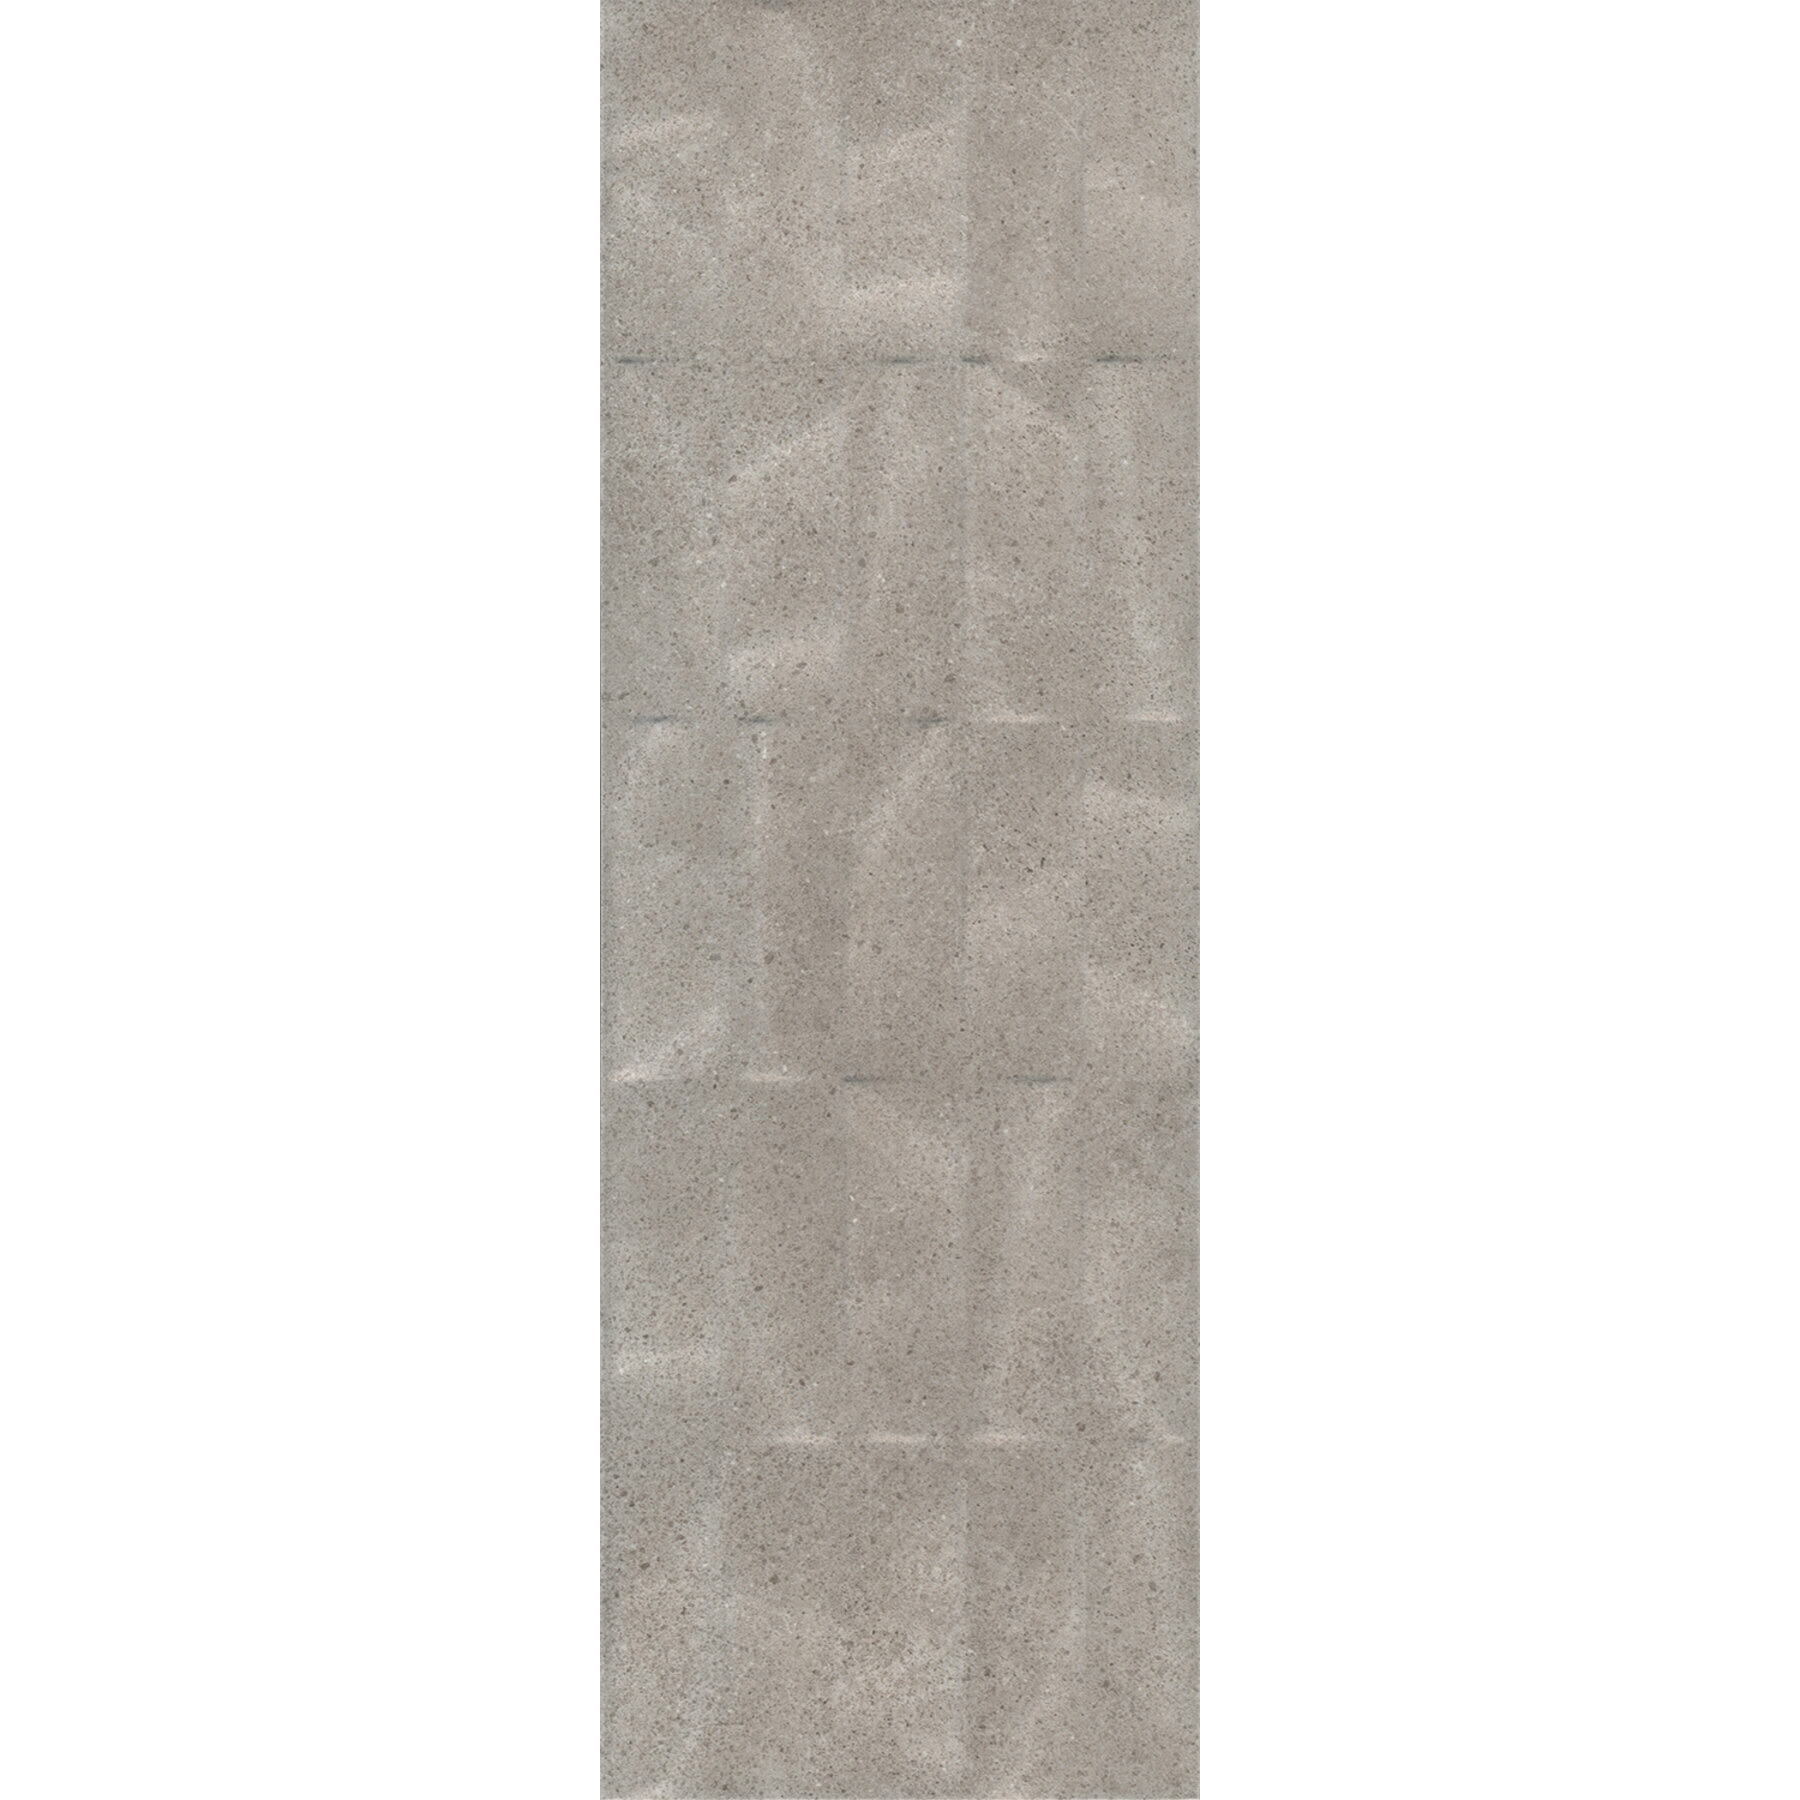 Плитка Kerama Marazzi Безана серый структура обрезной 12152R 25x75 см